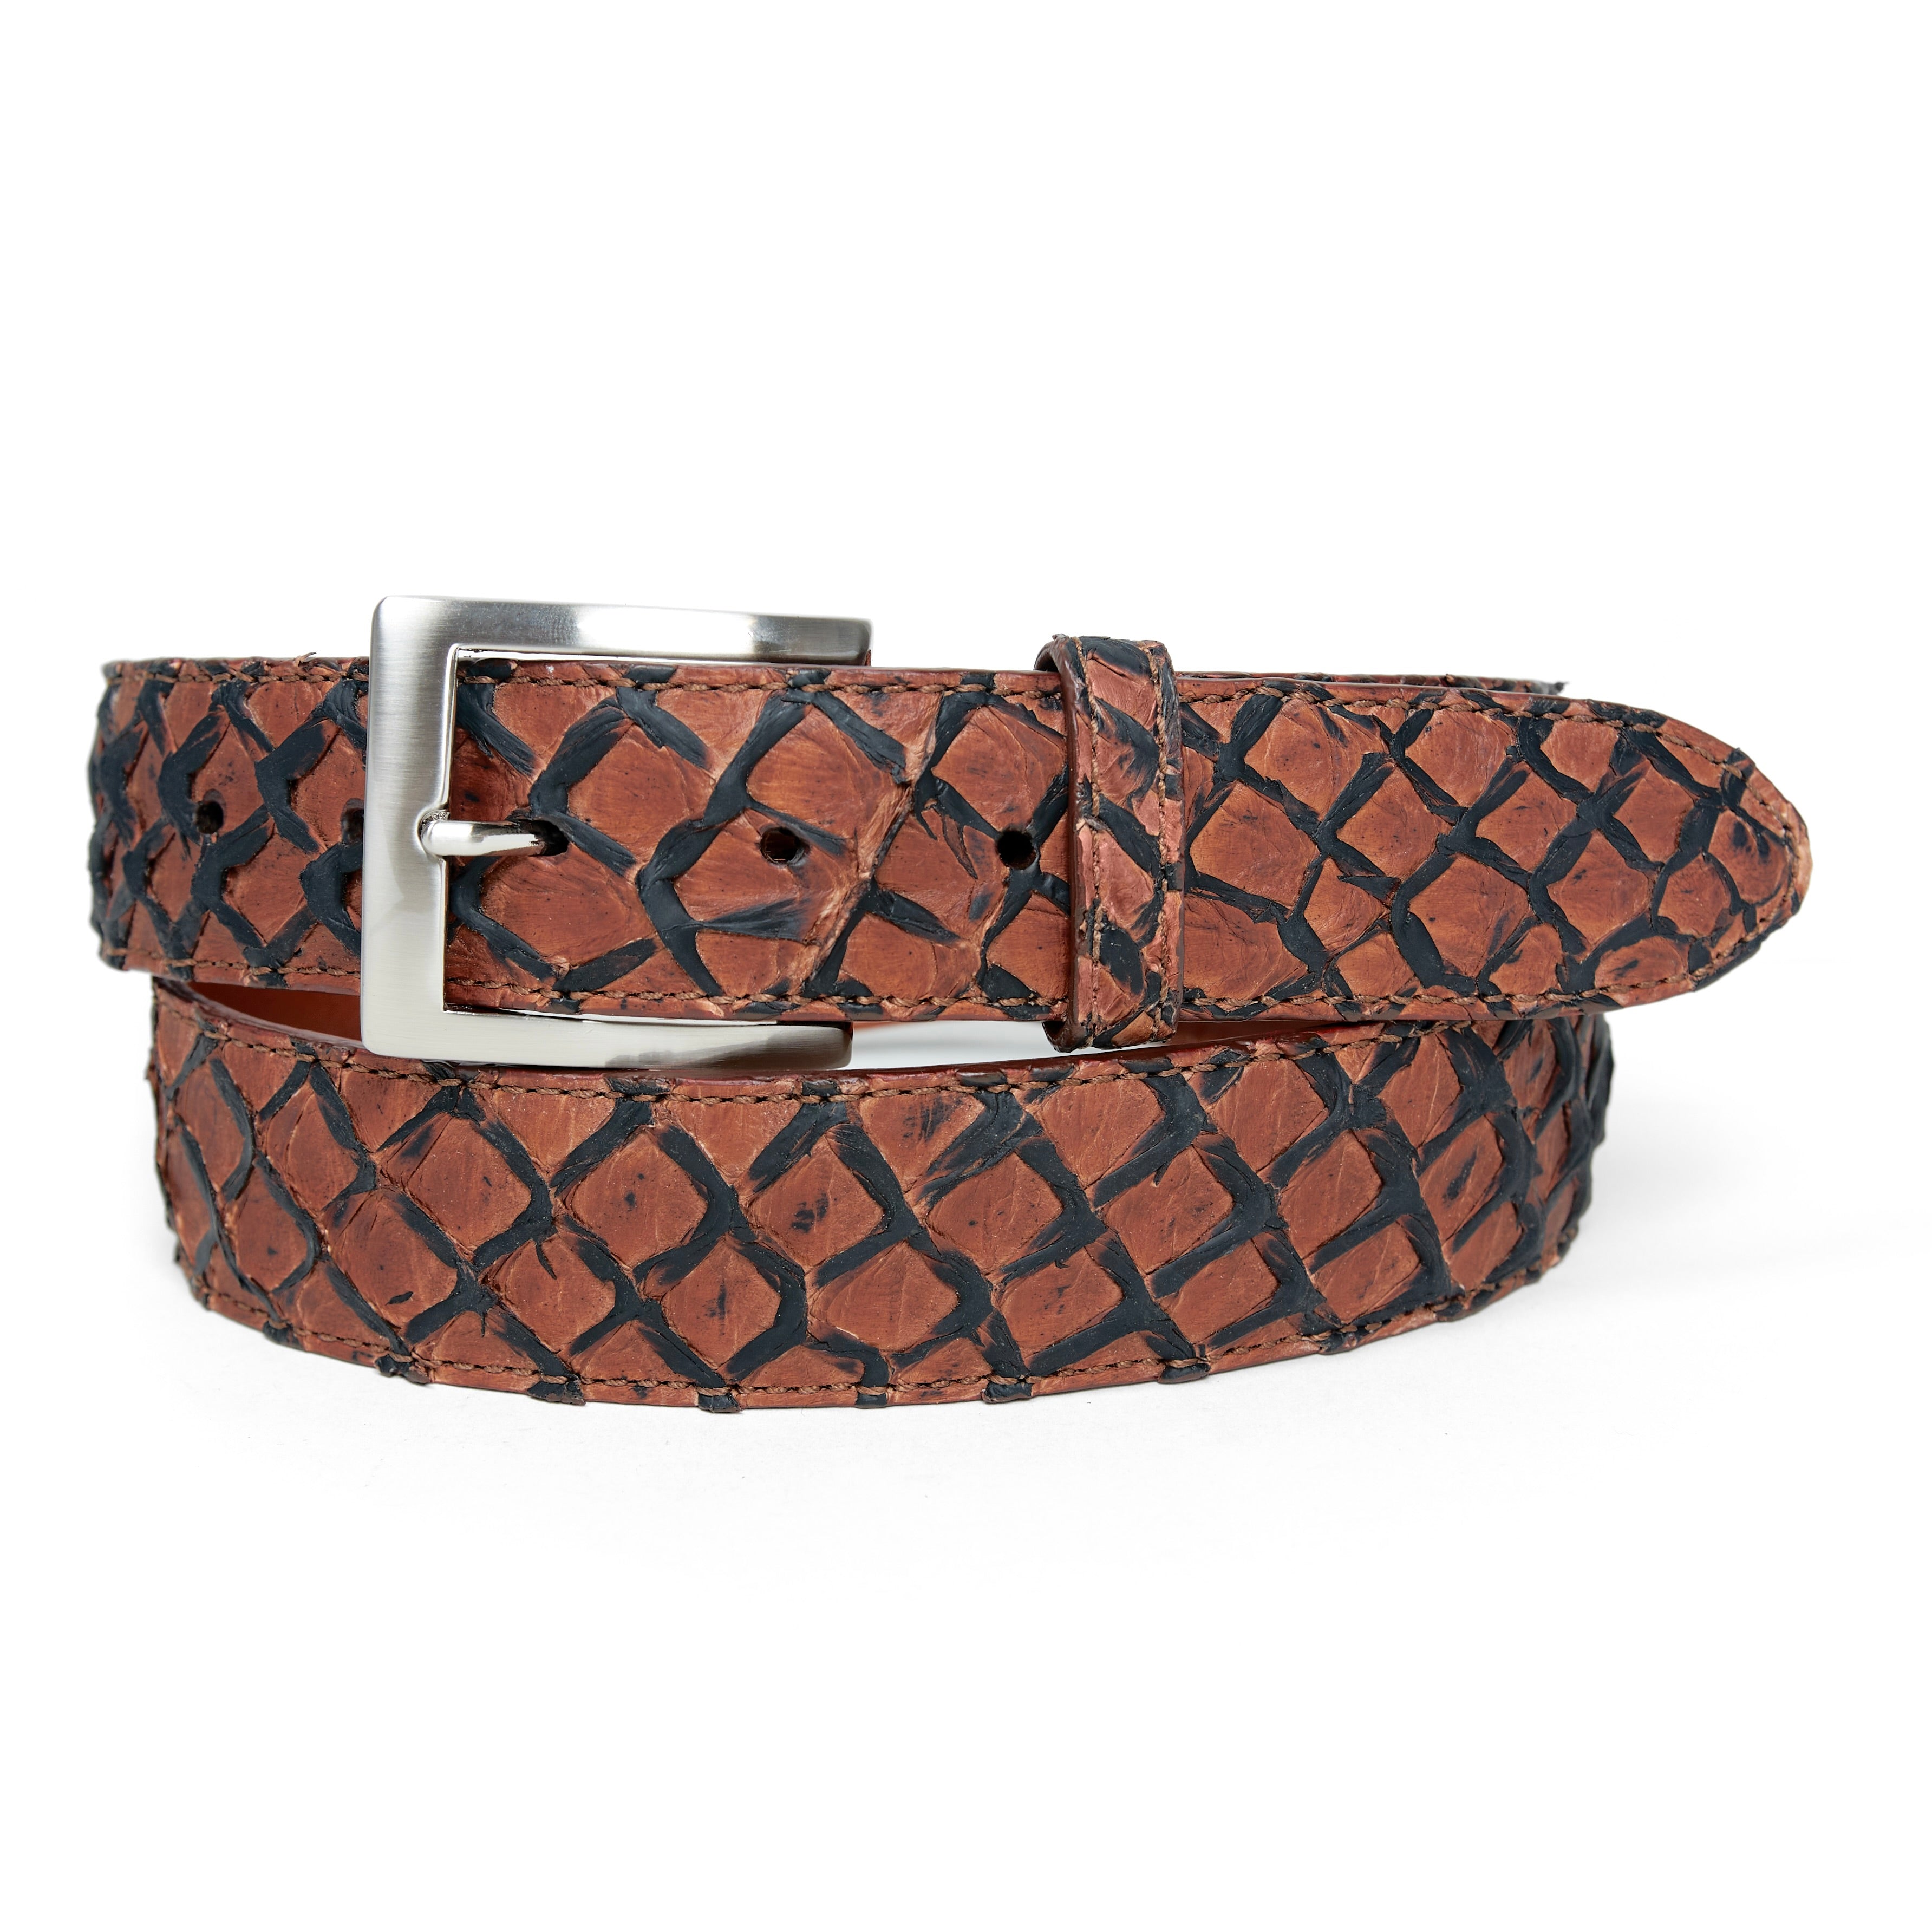 Arapaima leather belts